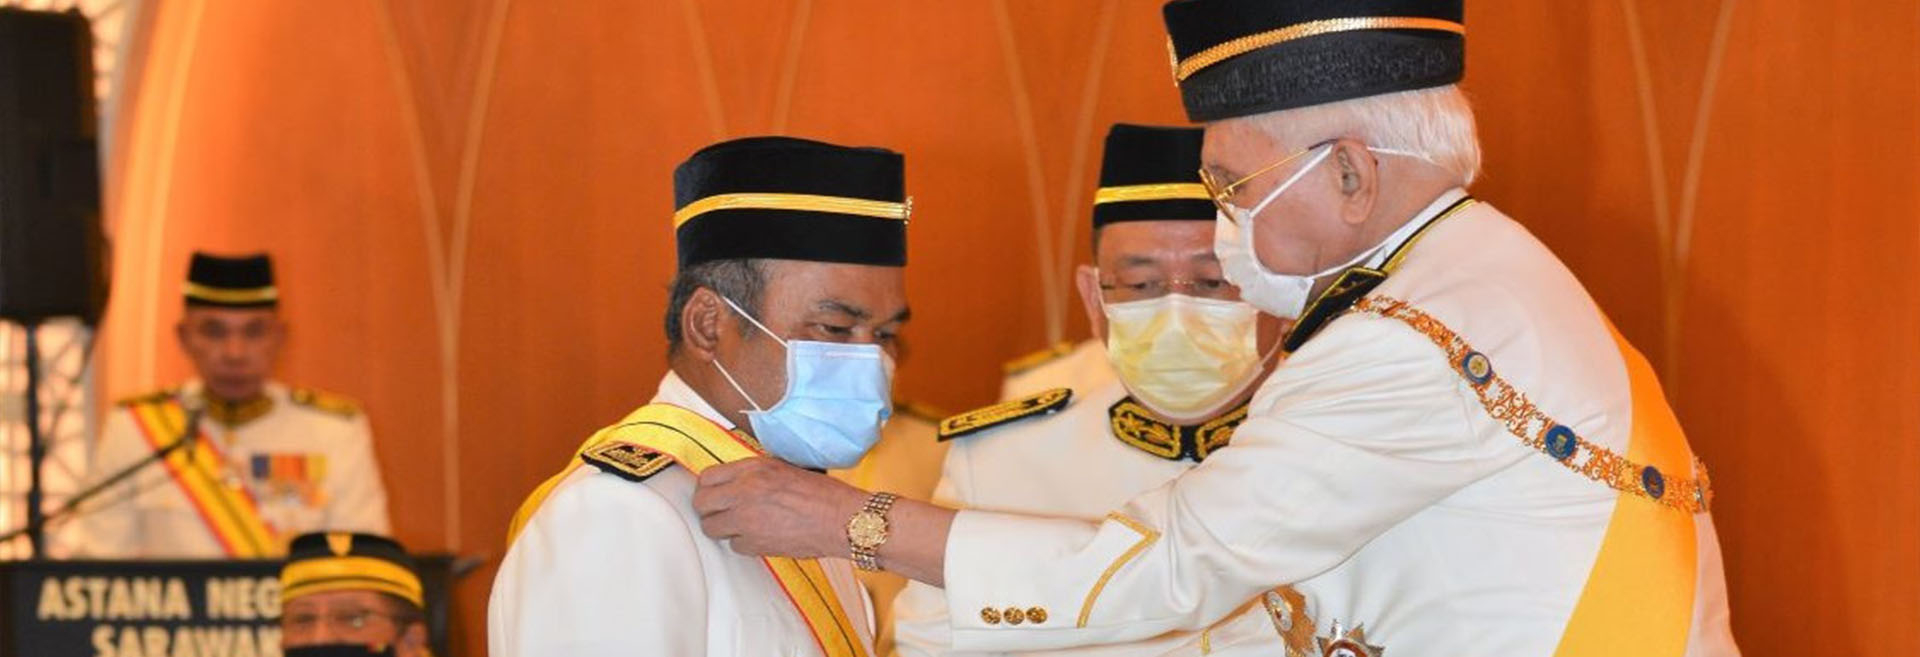 Montaj Persaraan YBhg. Datuk Haji Mohd. Shahabuddin Bin Omar, SUP Sarawak Ke 19 (State)